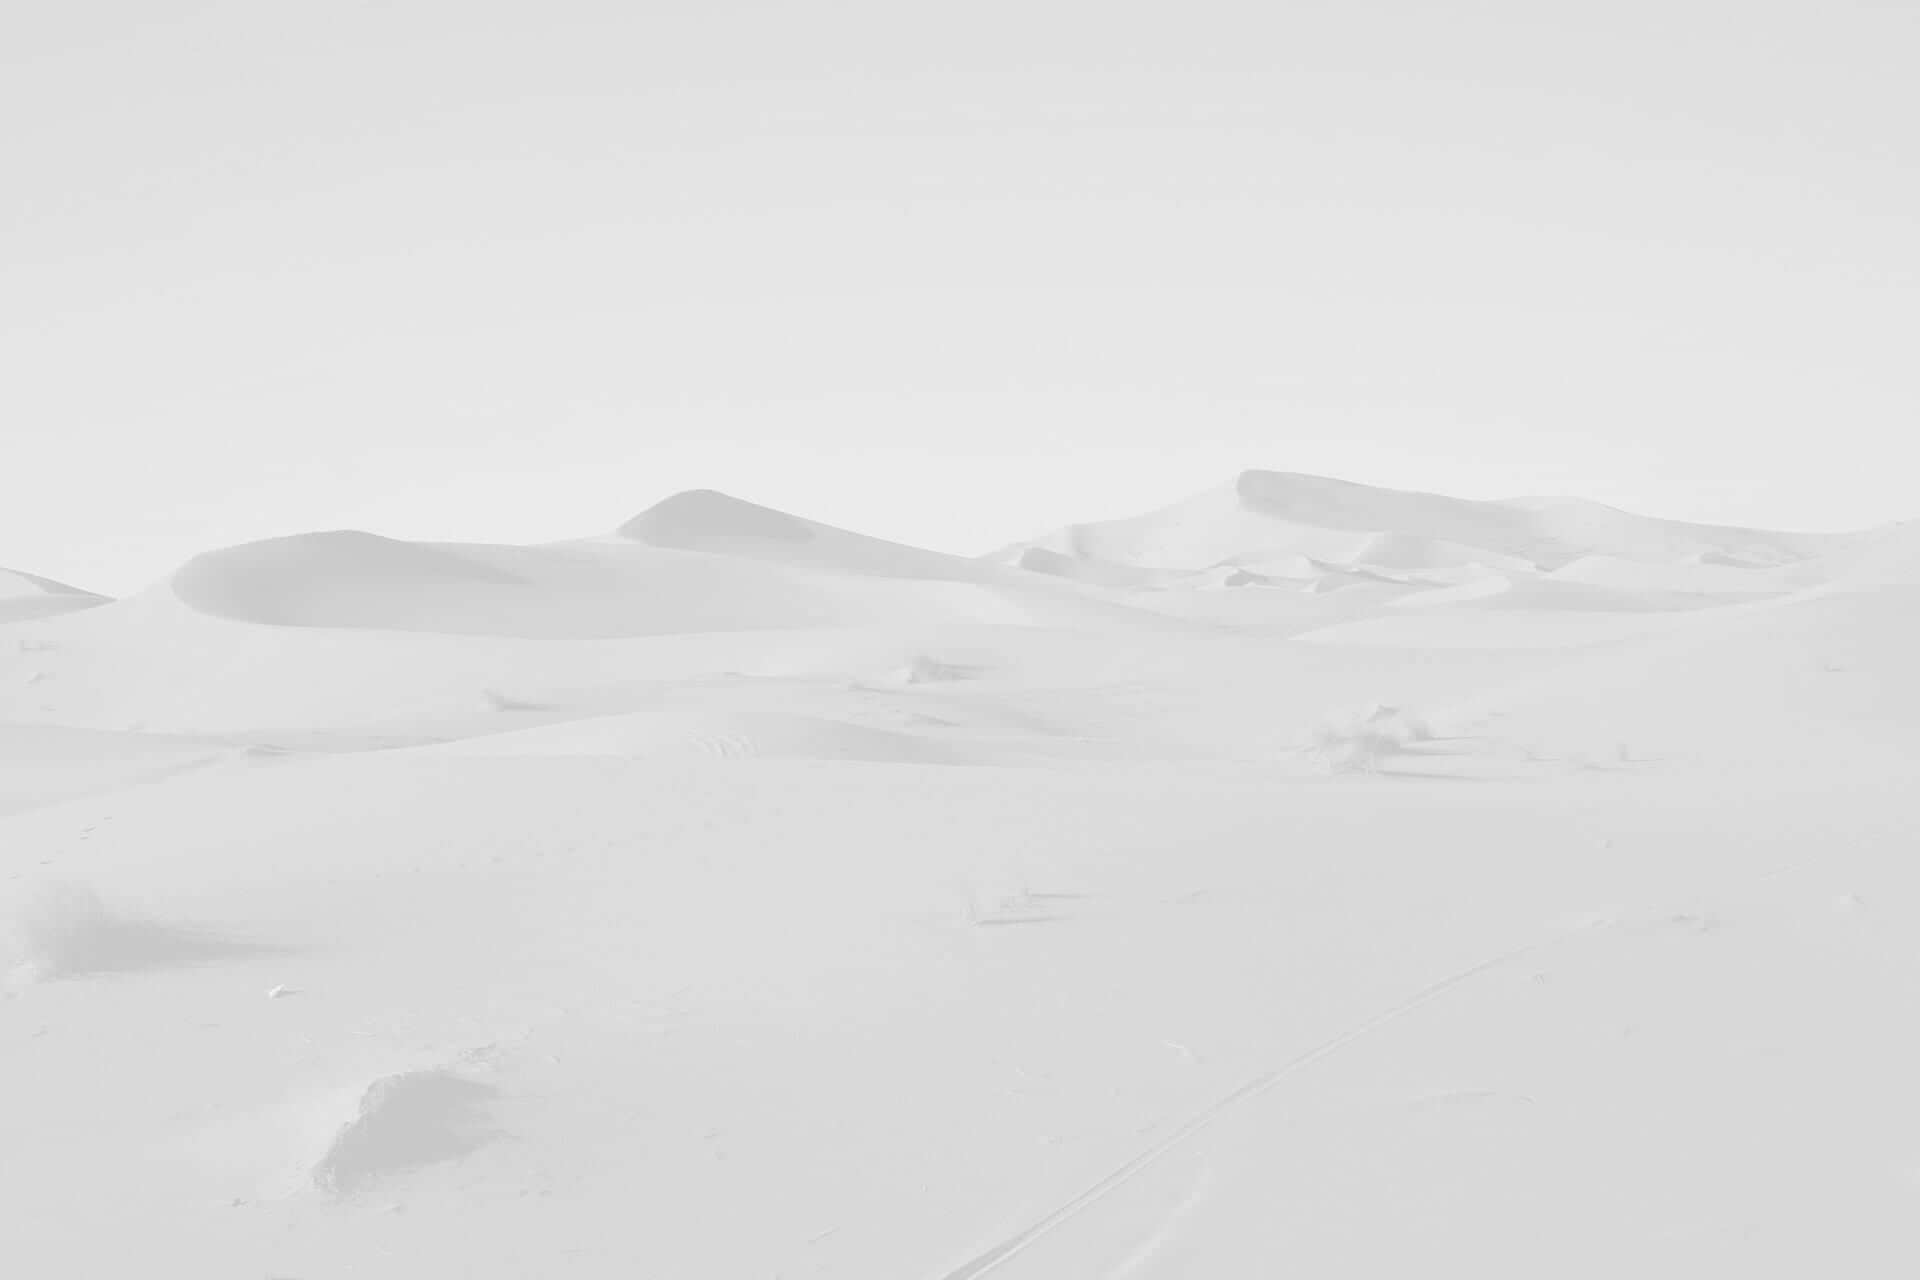 Vast, serene desert landscape covered in snow with gently rolling dunes under an overcast sky.